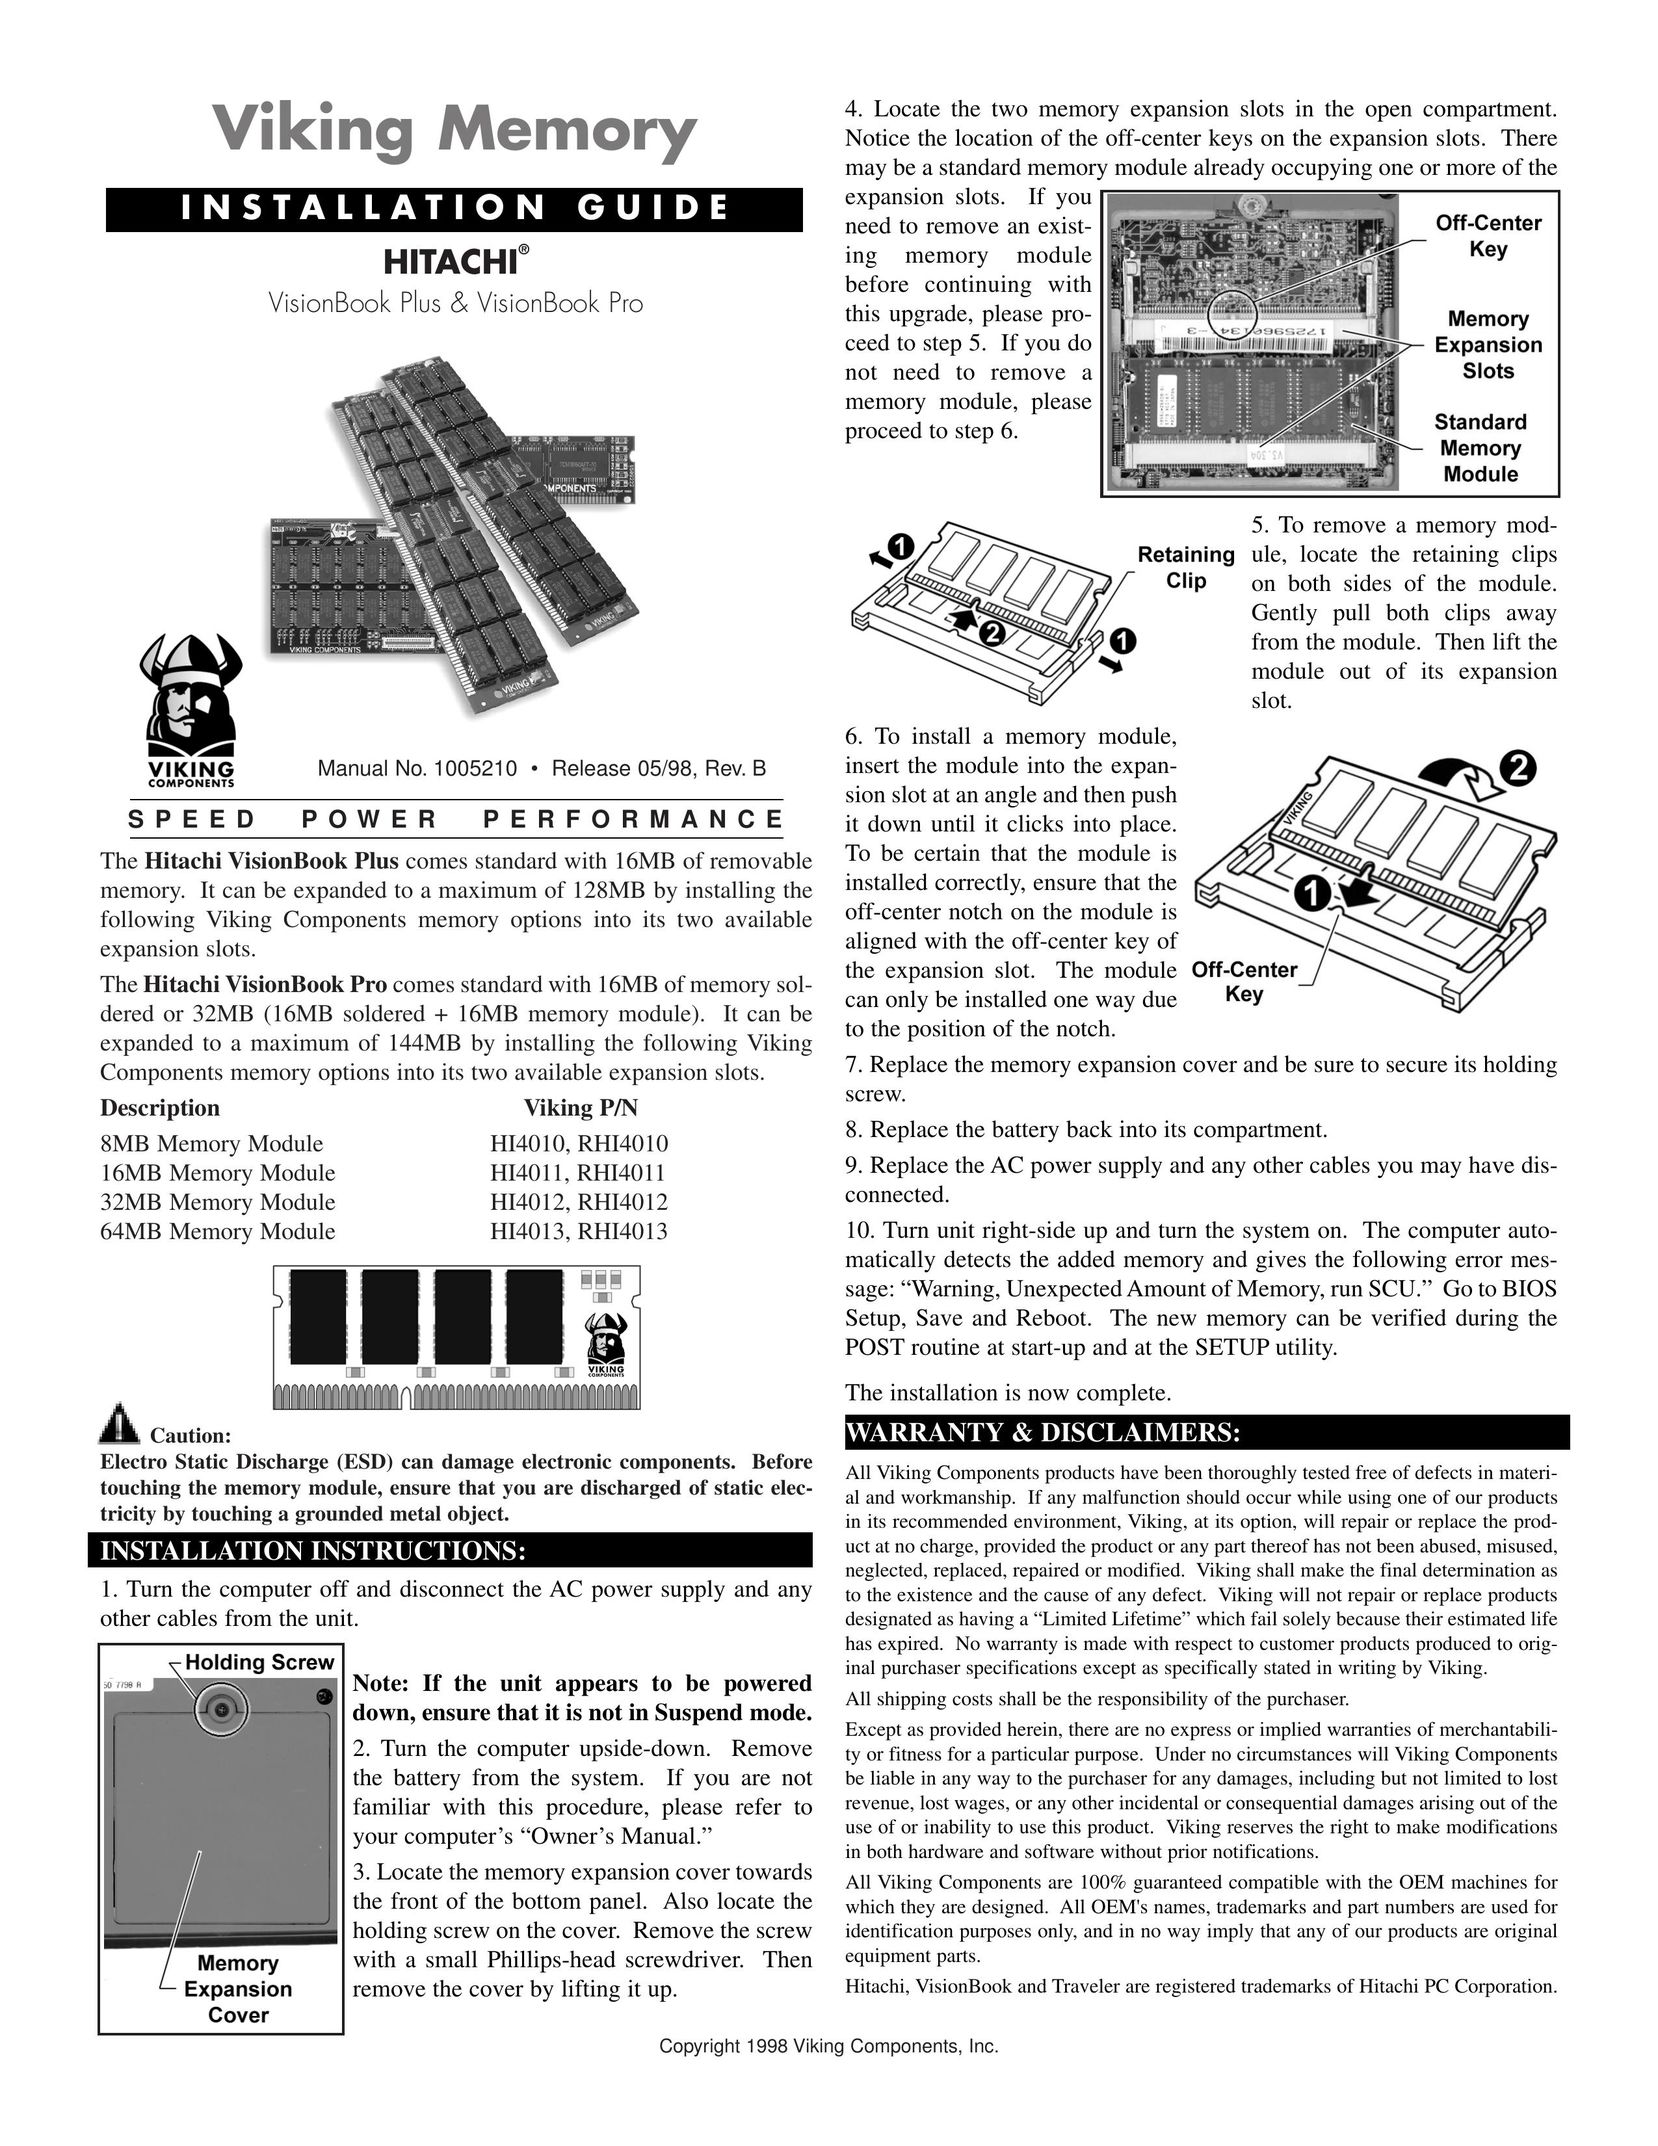 Viking RHI4013 Personal Computer User Manual